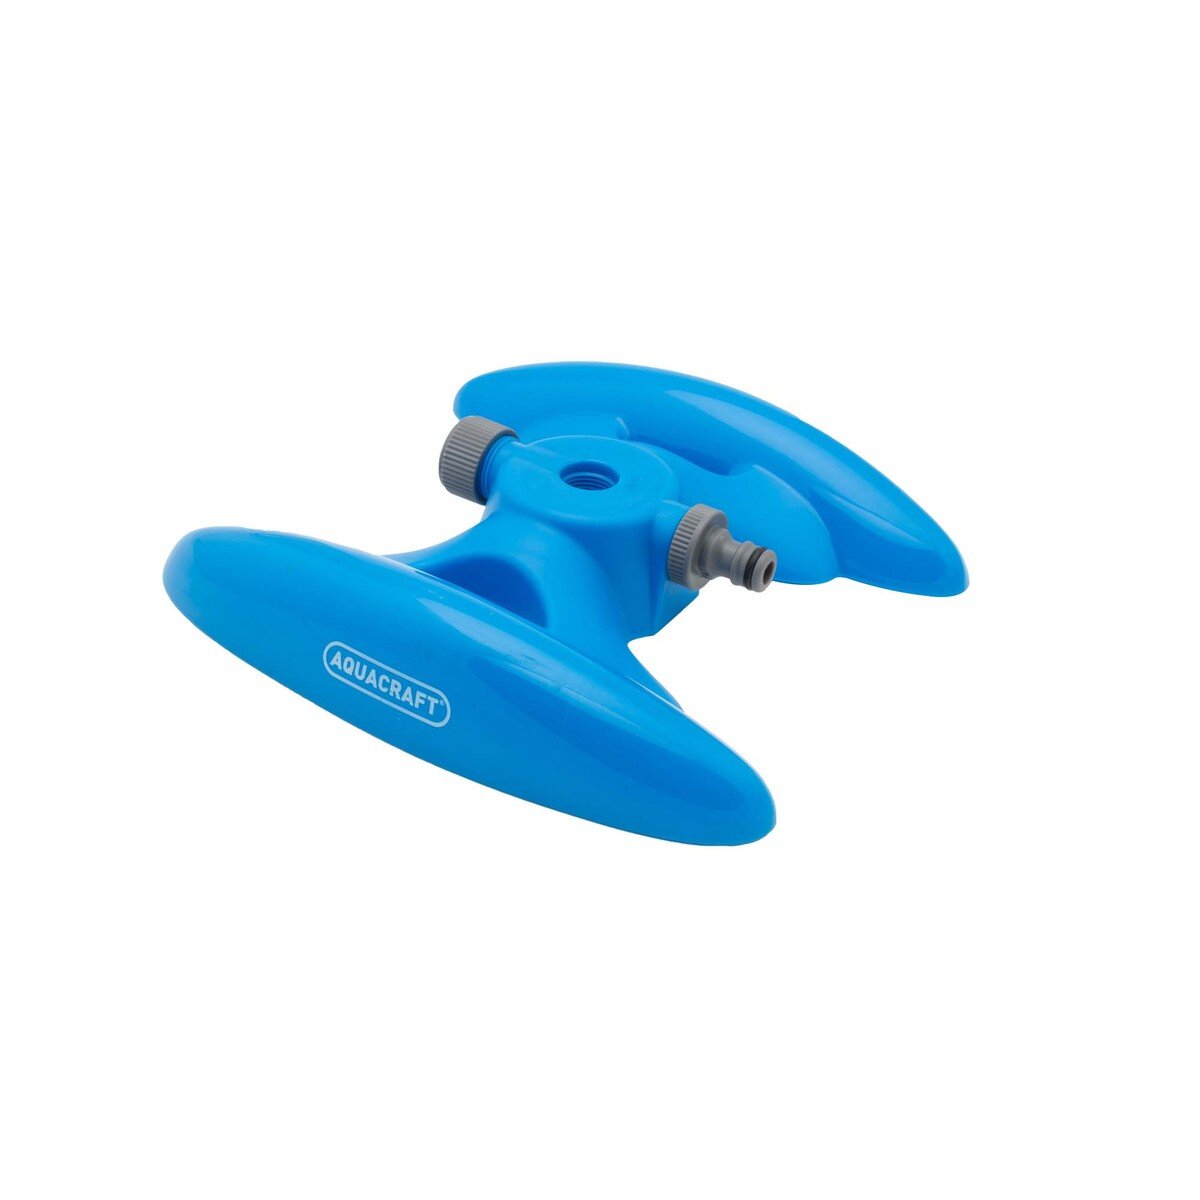 Aquacraft Rotary 3-Arm Water Sprinkler, Blue, 260230